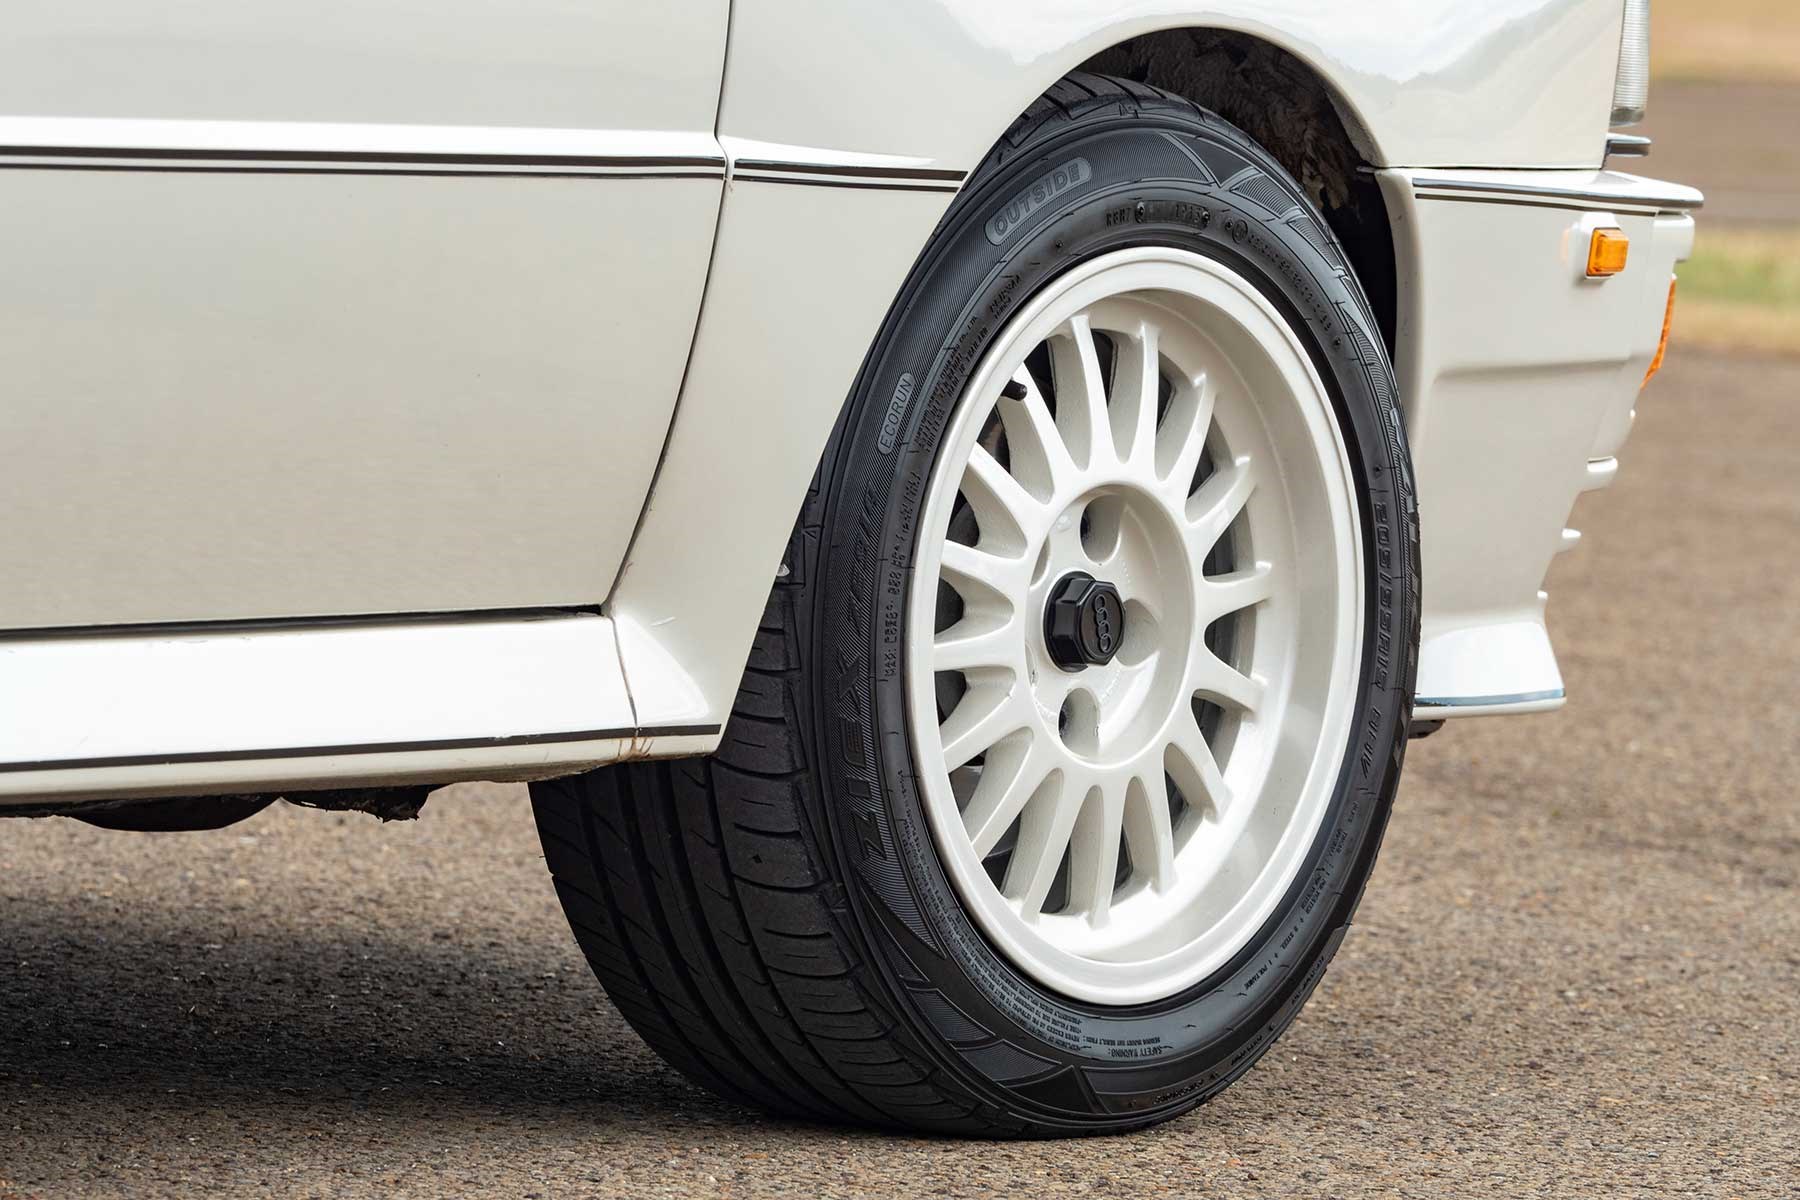 Humble 15in white alloy wheels wearing 205/55 Falkens